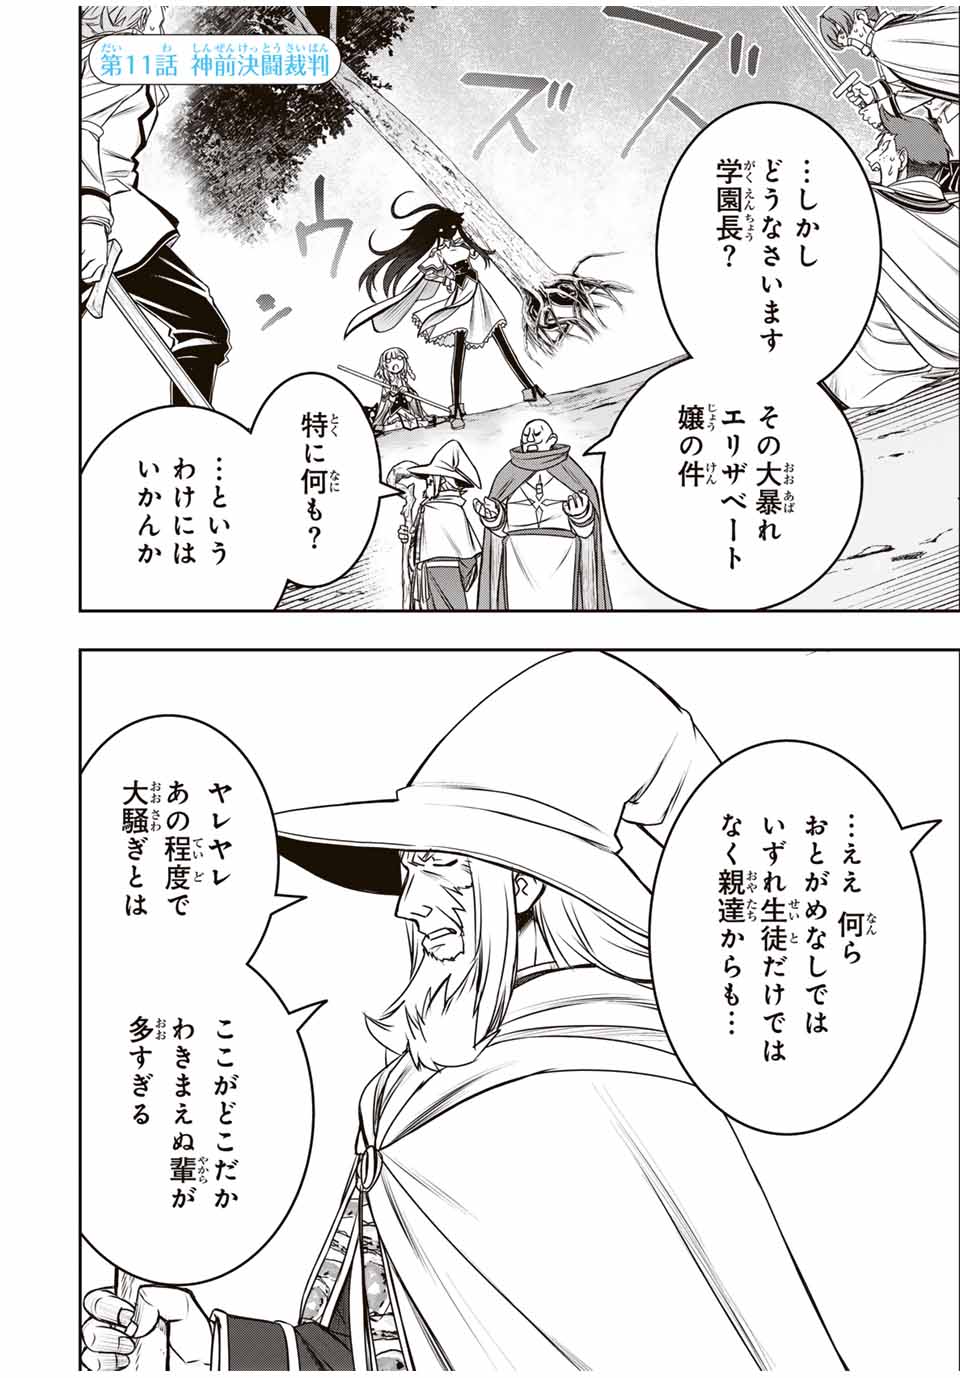 Nengan no Akuyaku Reijou (Last Boss) no Karada wo Teniiretazo!  - Chapter 11 - Page 2